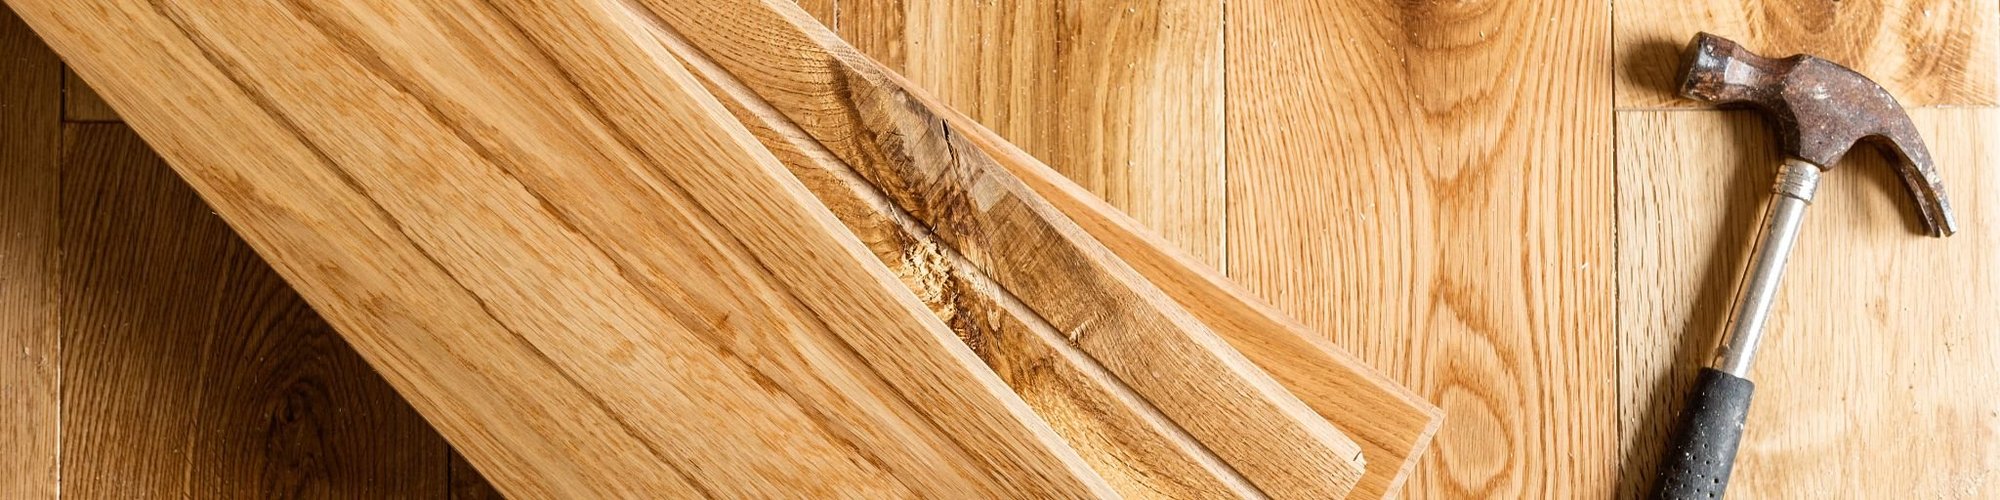 Hammer on hardwood planks - CONTEMPORARY CARPET & FLOORING in FL